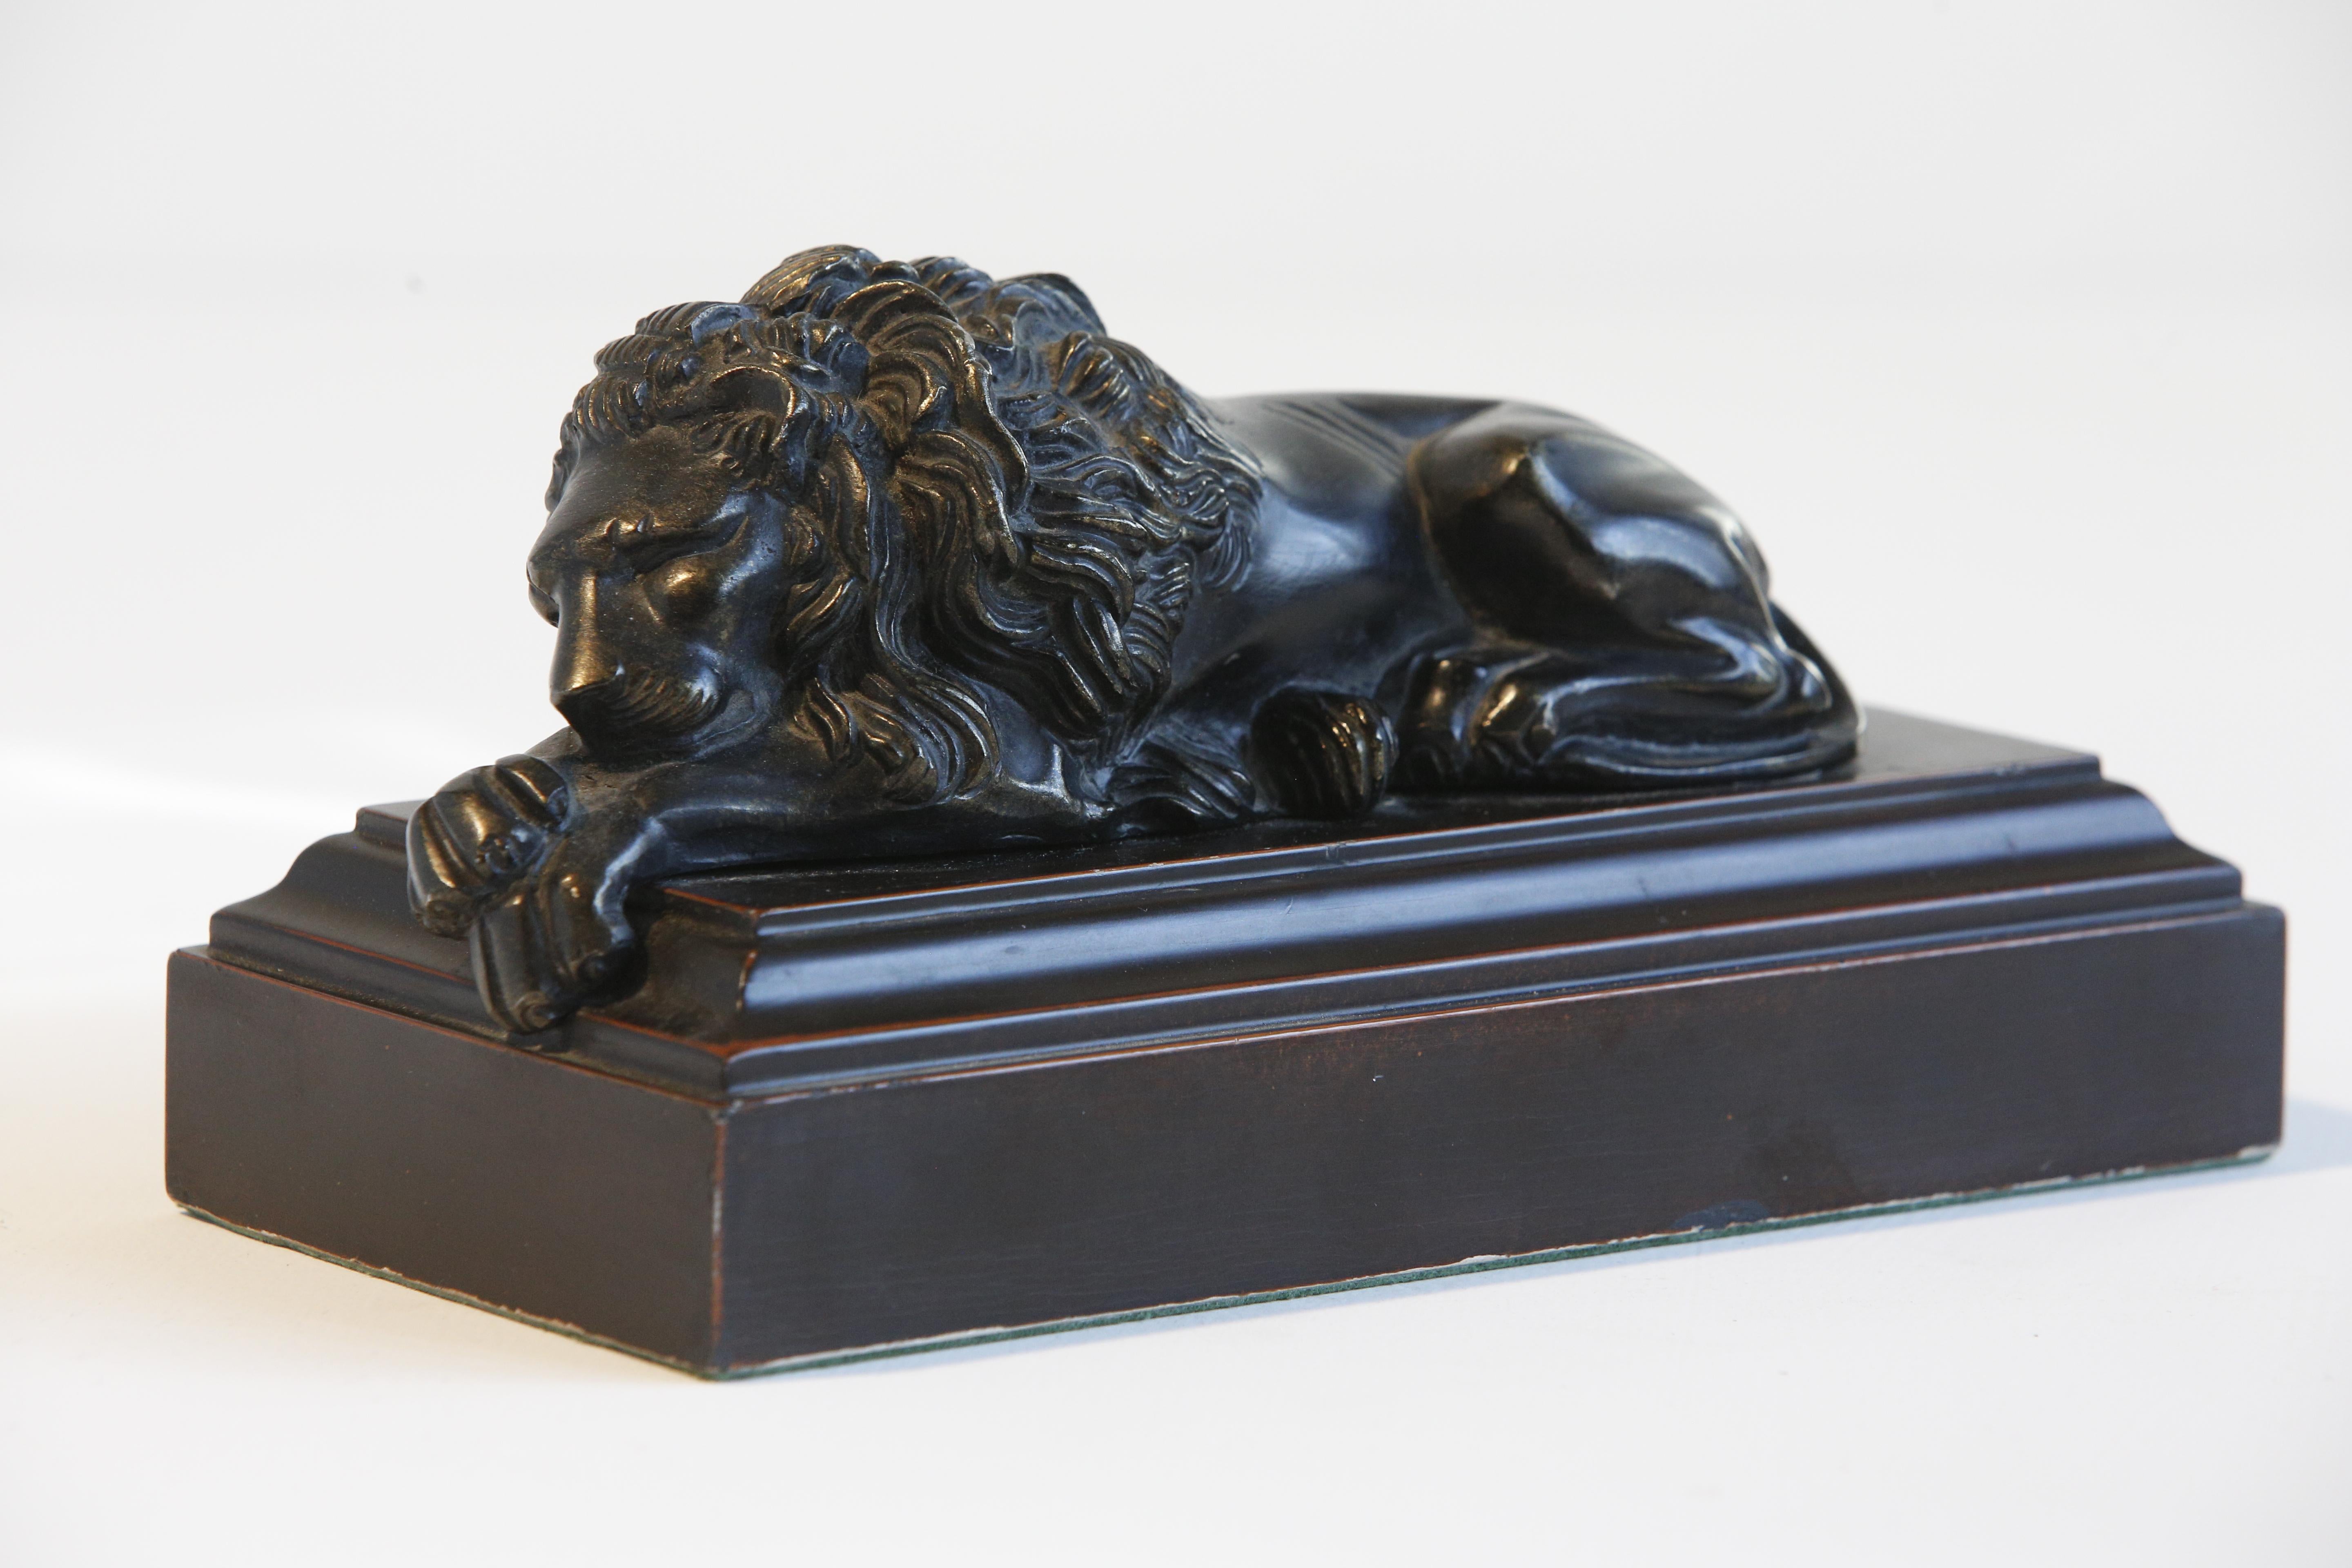 Pair of Cast Sculptures Bronze Lions, after Antonio Canova, 19th Century For Sale 2